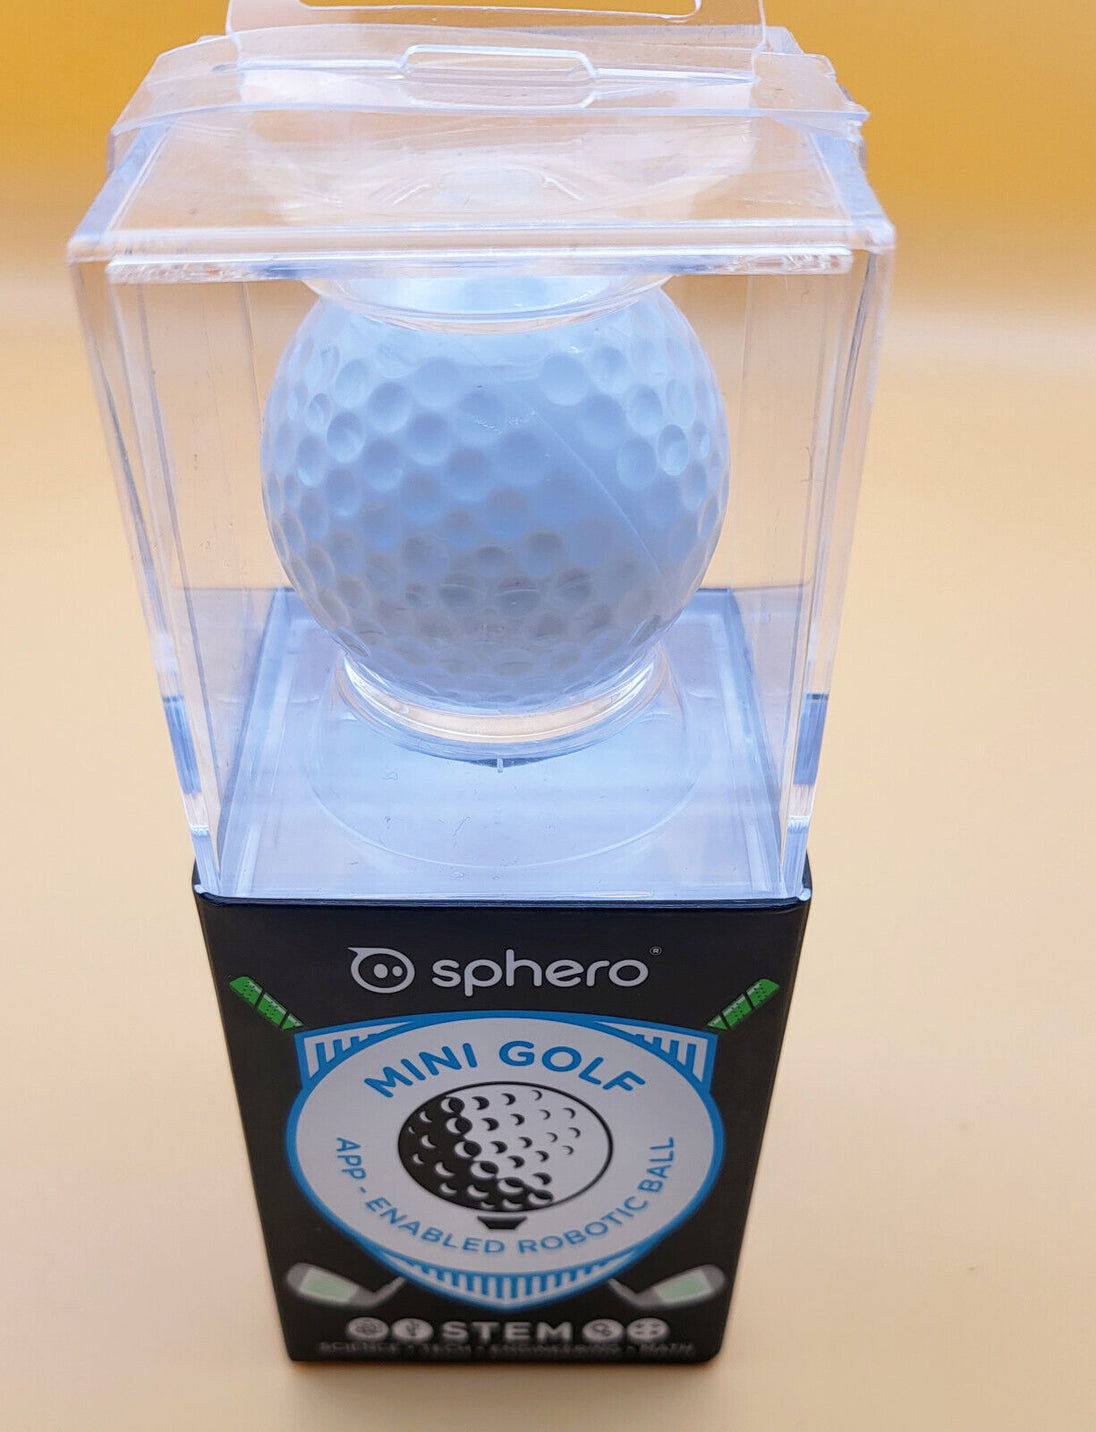 Sphero Mini Golf: App-Enabled Programmable Robot Ball - STEM Educational Toy for - Chys Thijarah